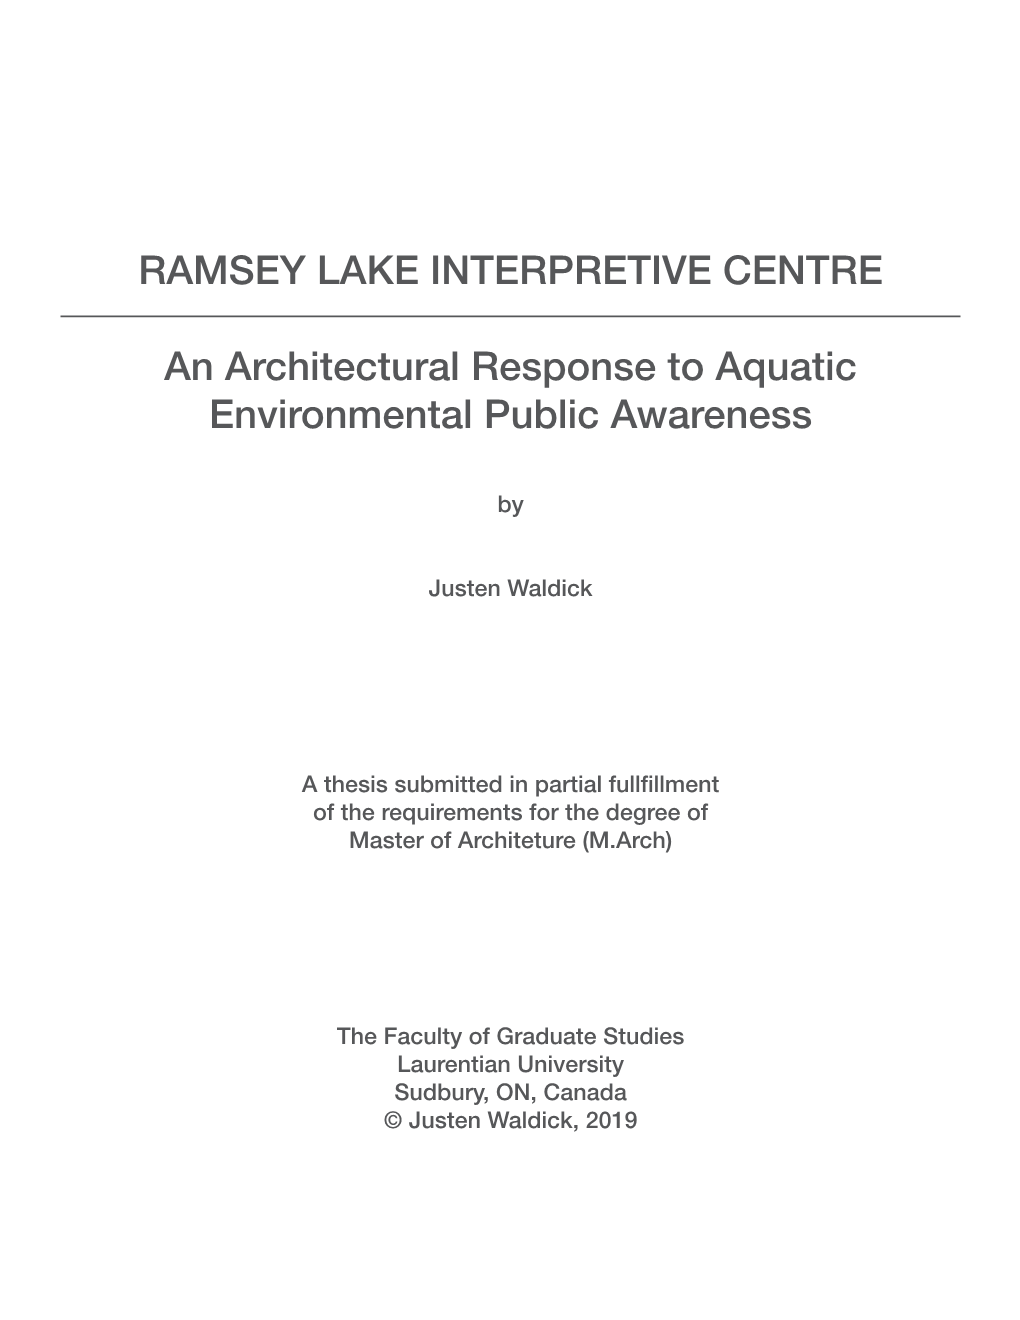 RAMSEY LAKE INTERPRETIVE CENTRE an Architectural